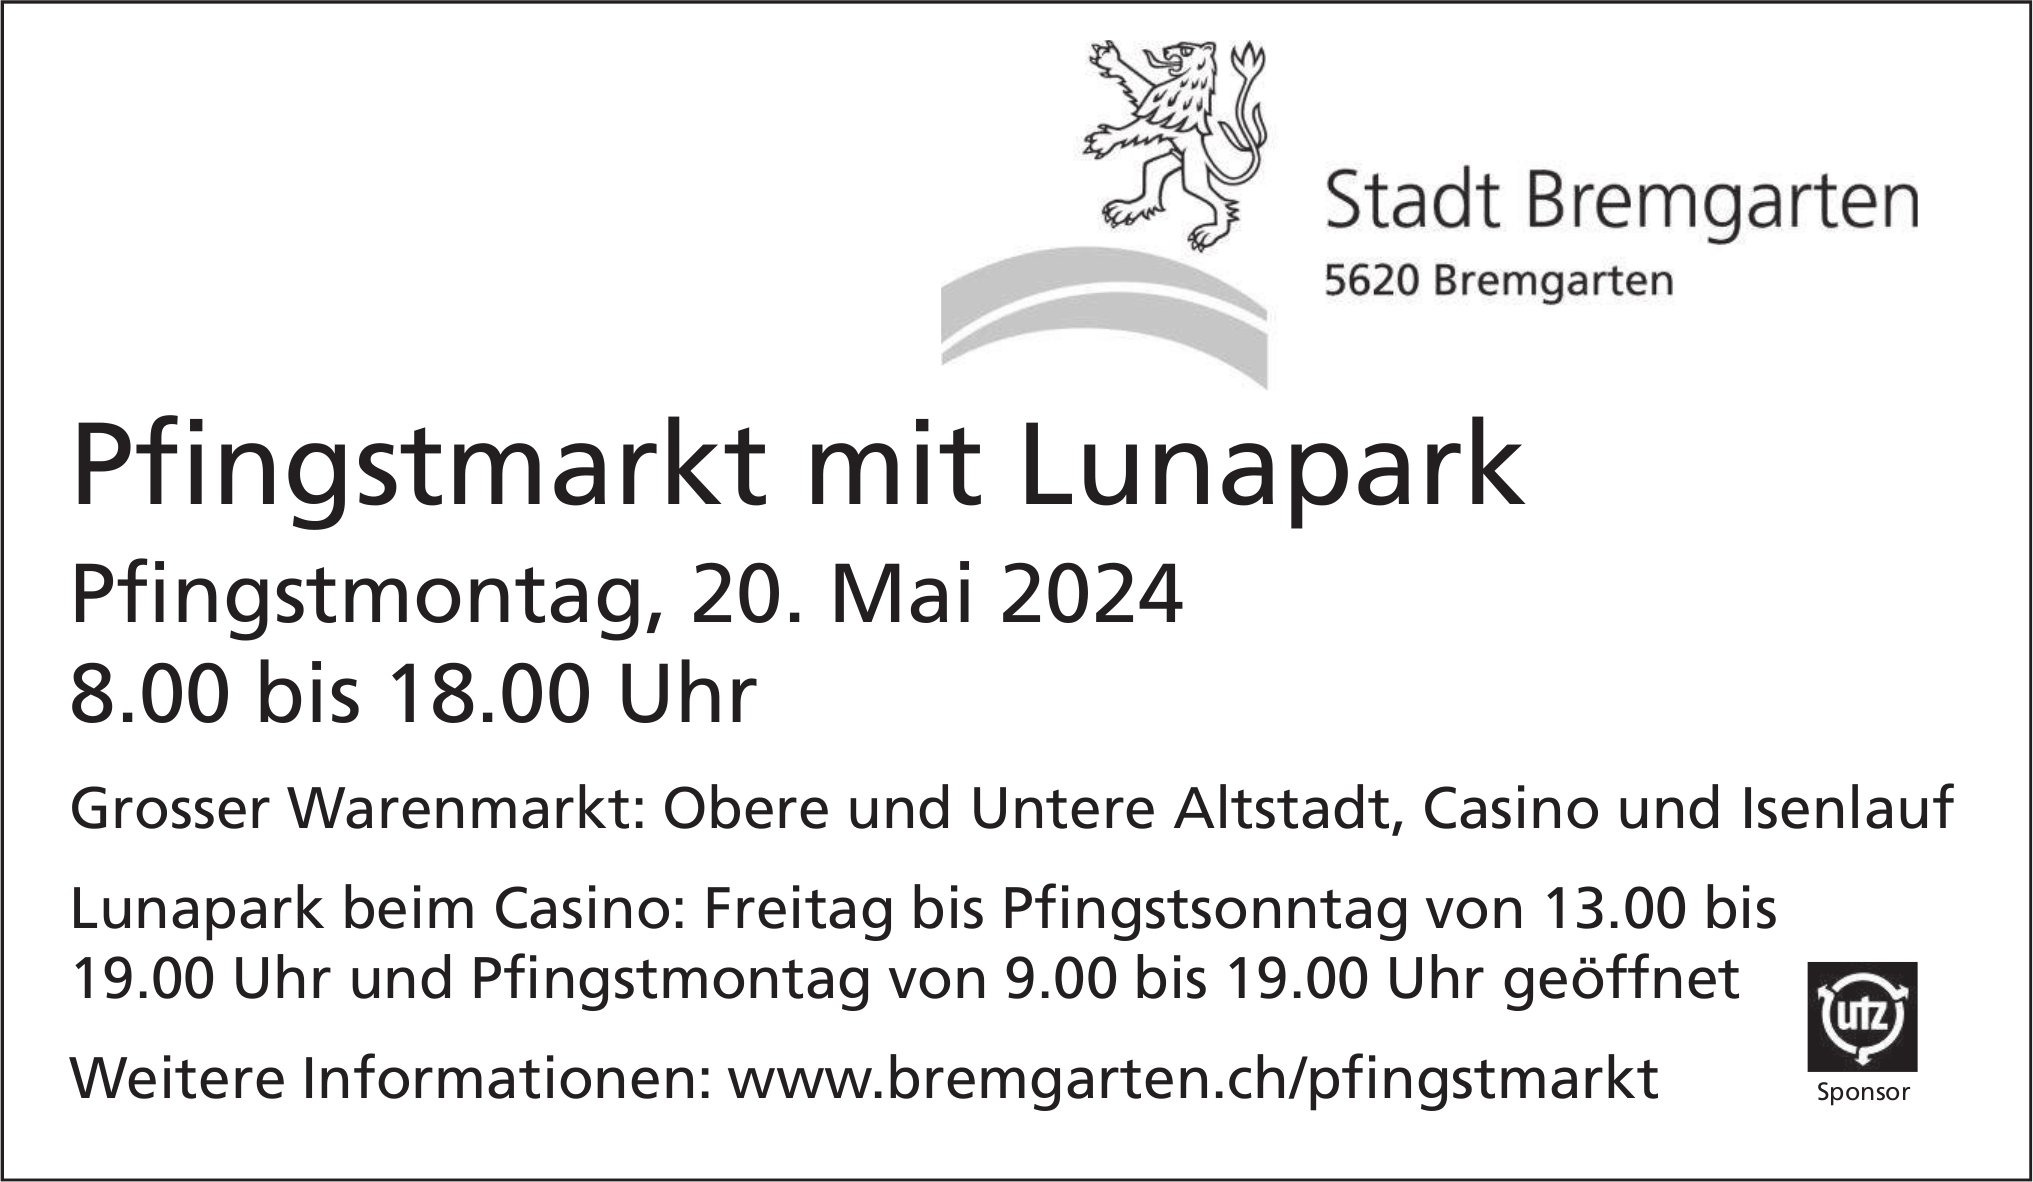 Pfingstmarkt mit Lunapark, 20. Mai, Stadt, Bremgarten